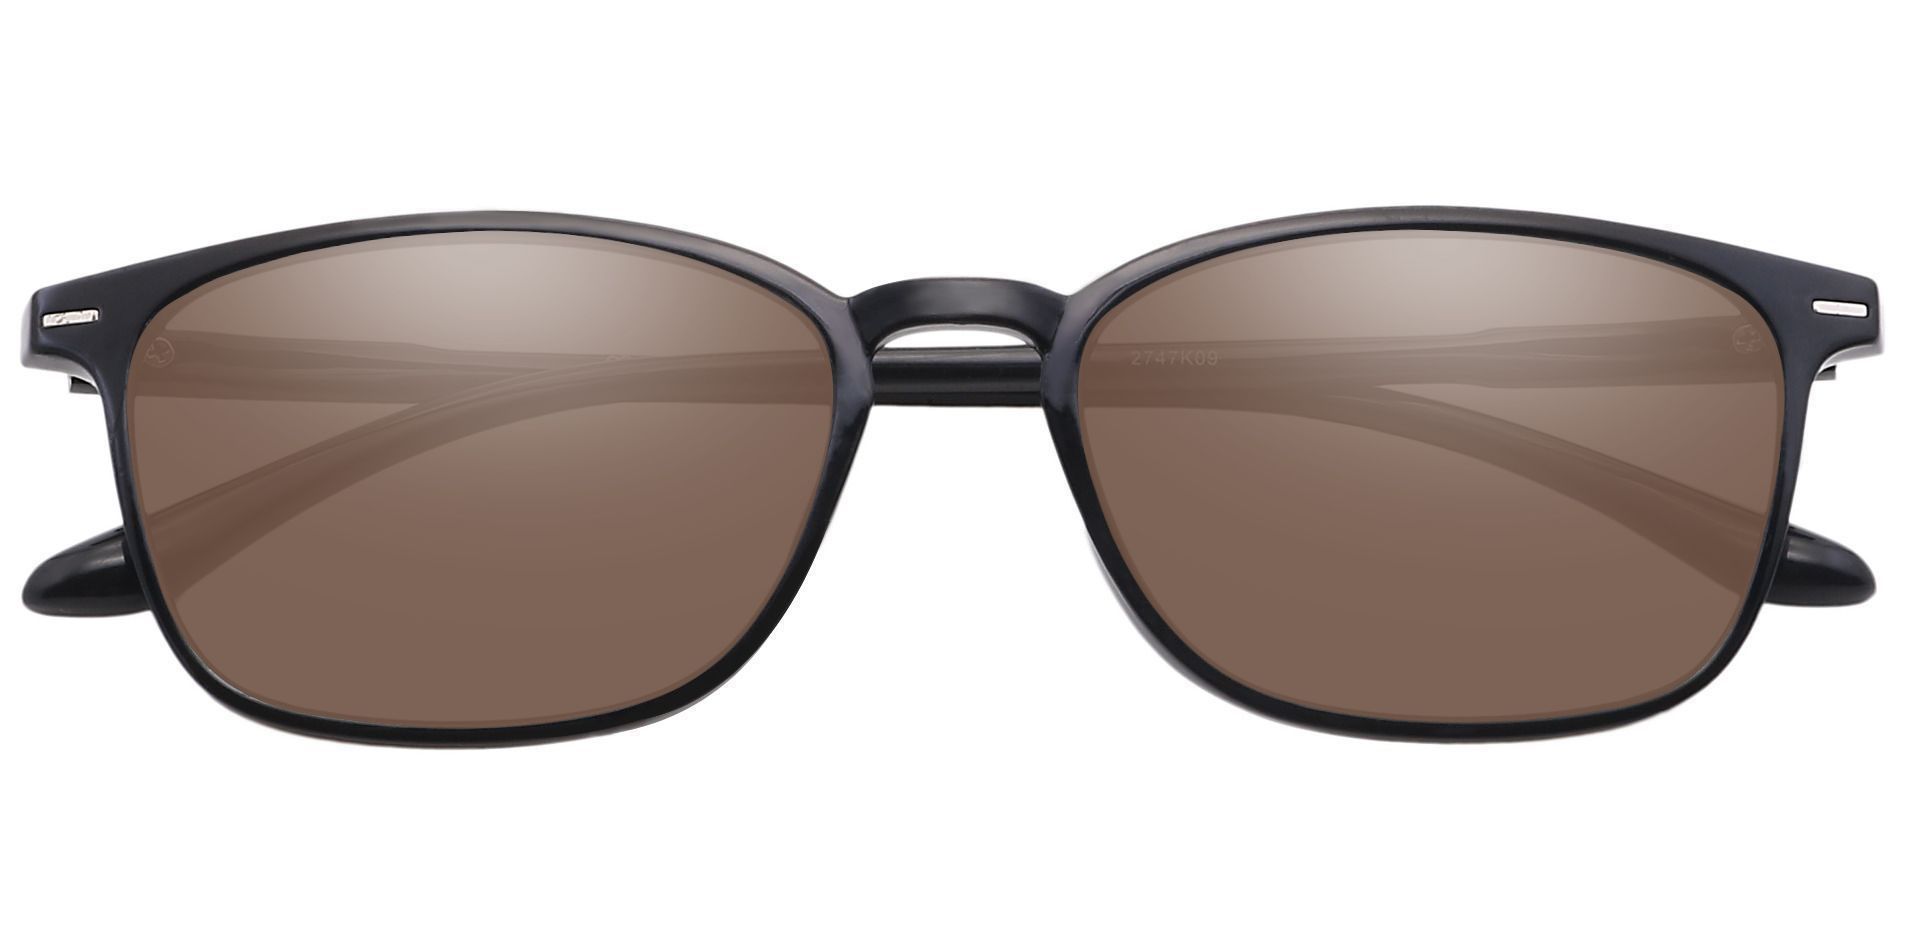 Cabo Oval Prescription Sunglasses -  Black Frame With Brown Lenses